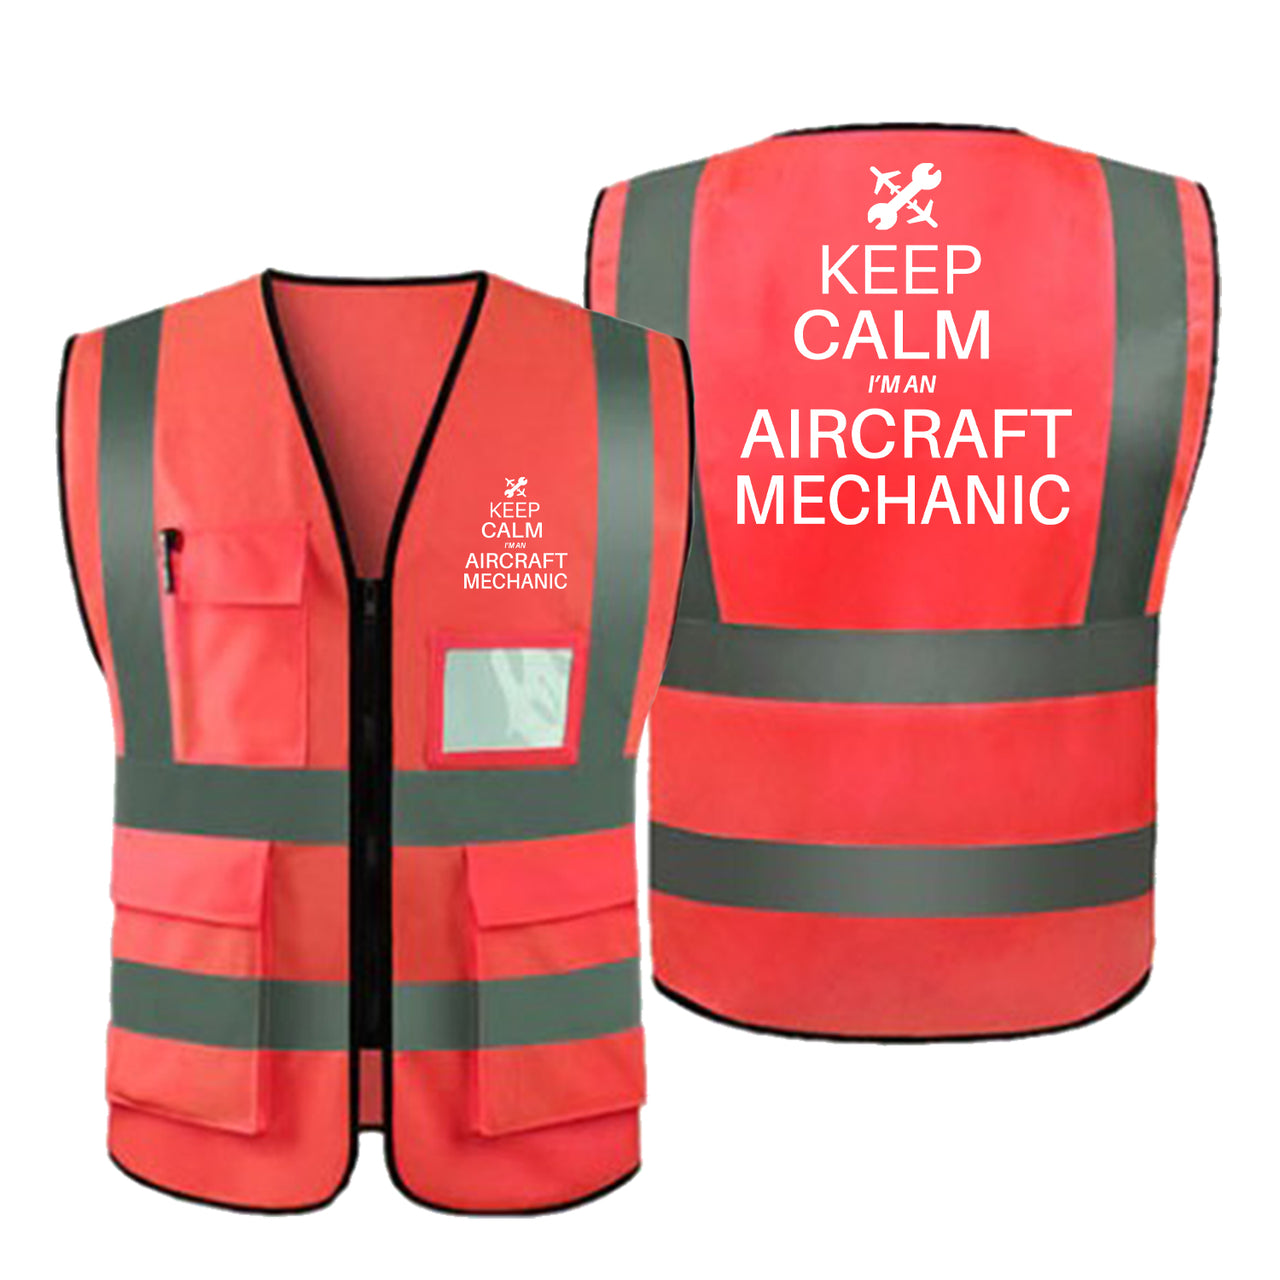 Aircraft Mechanic Designed Reflective Vests